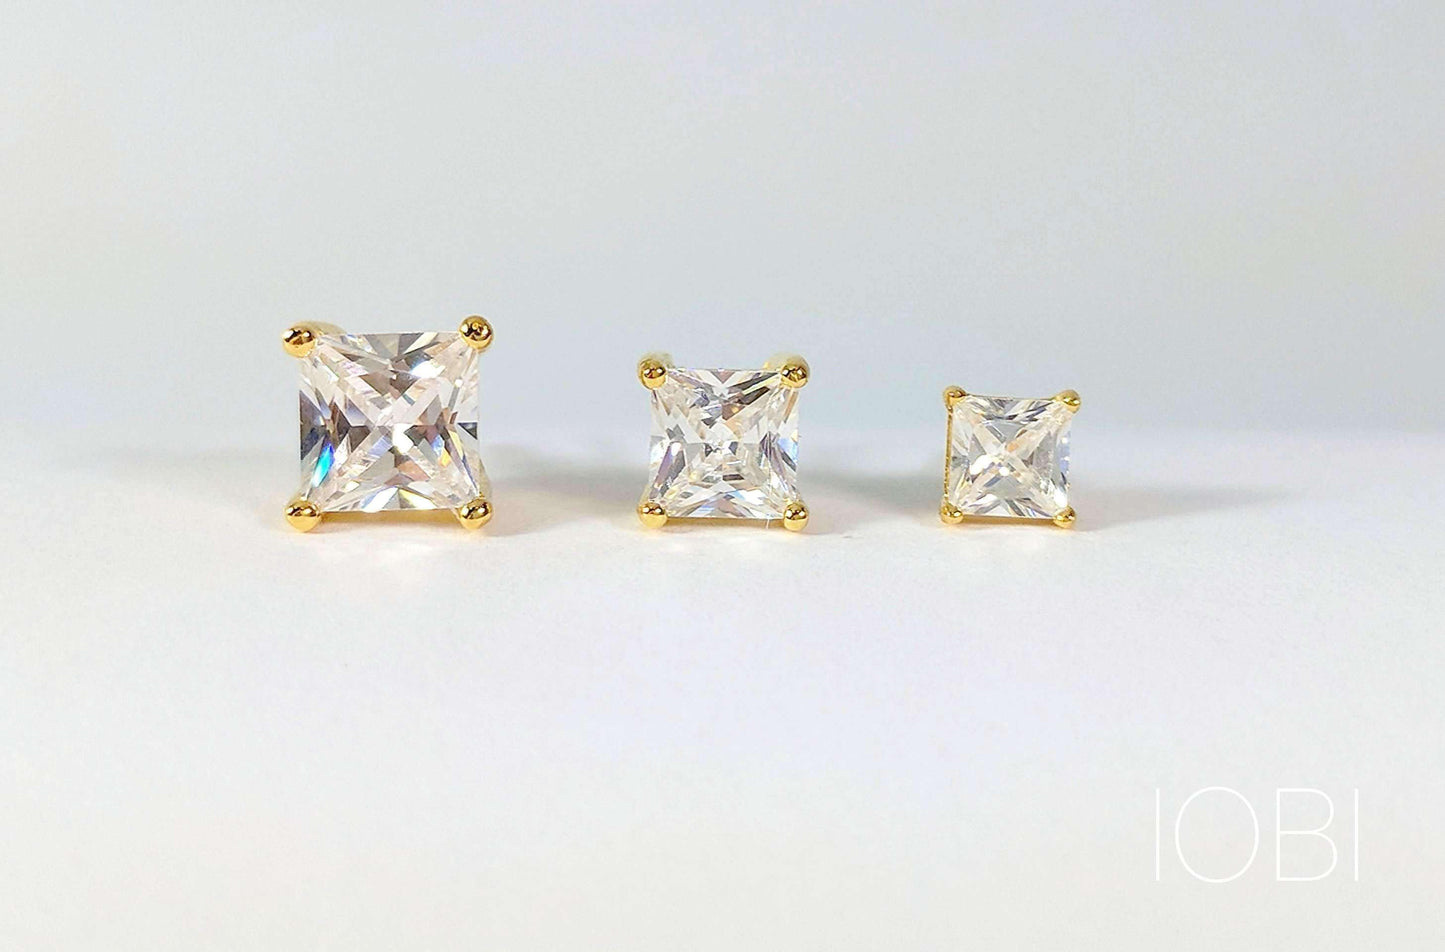 Tiara Princess Cut IOBI Simulated Diamond Solitaire Stud Sterling Silver Earrings for Woman